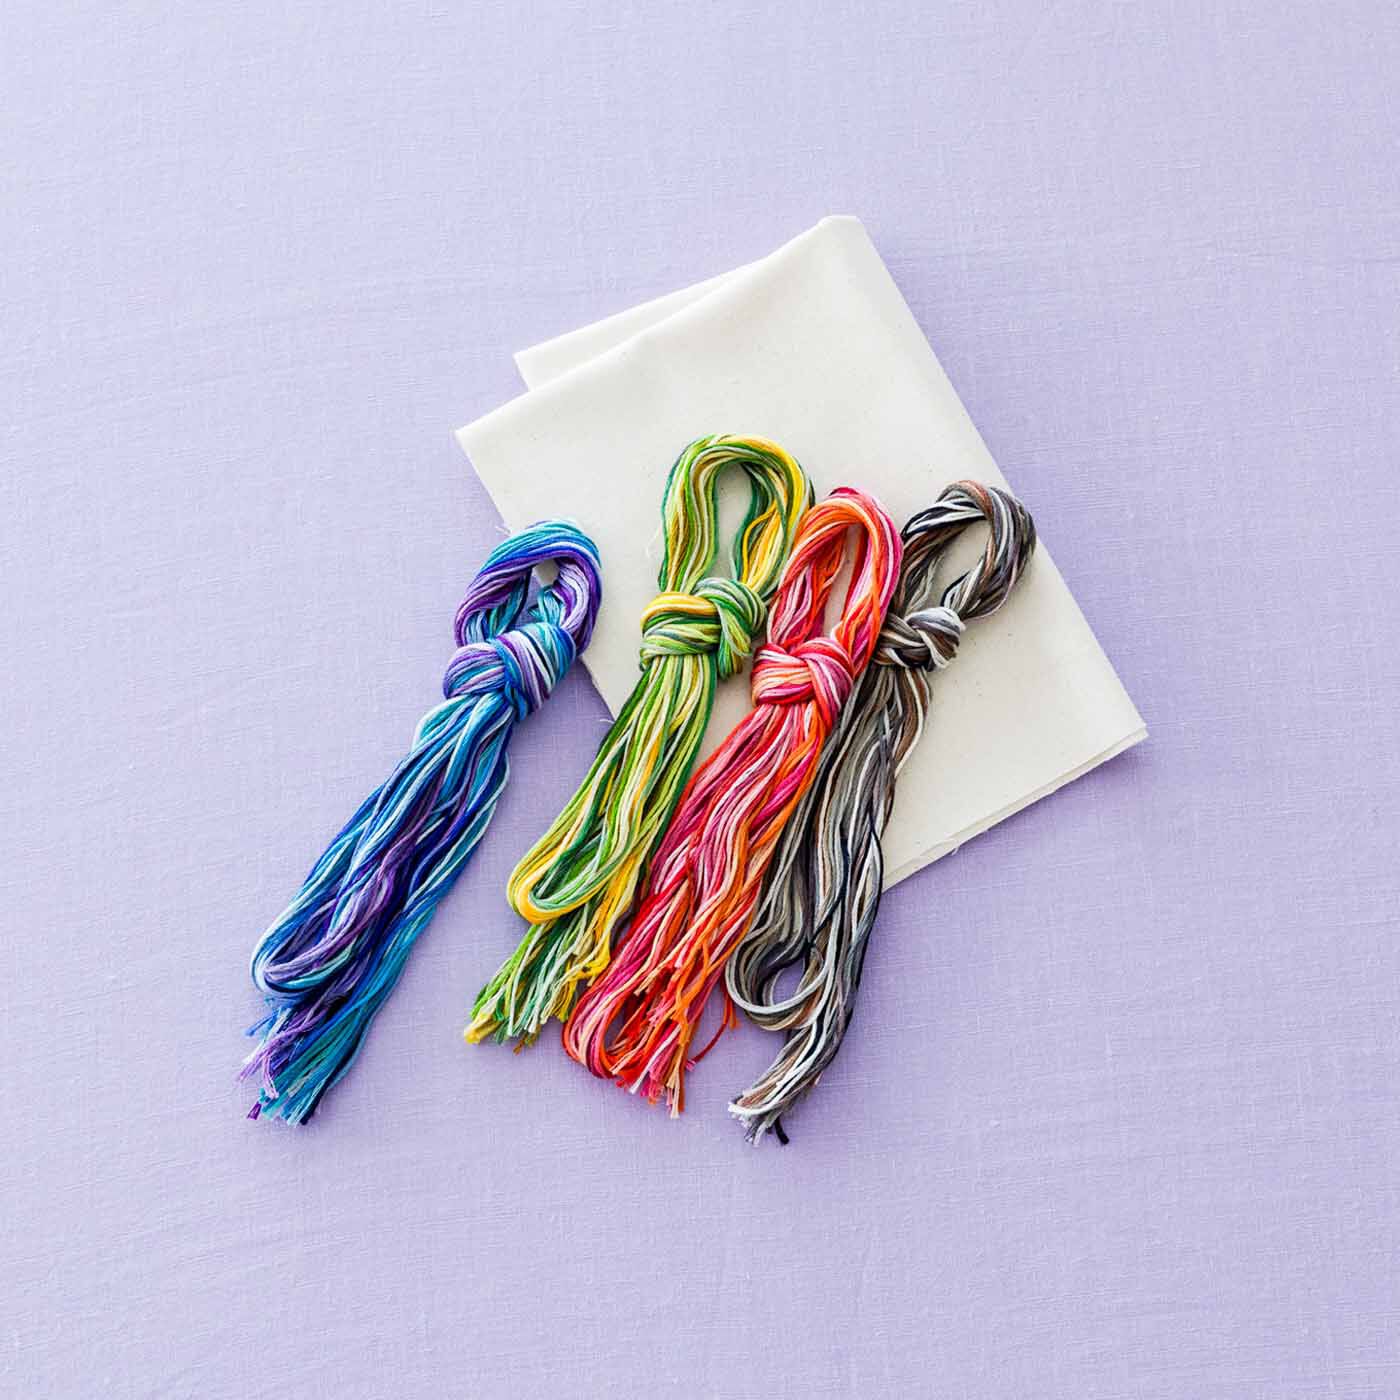 Couturier special|100色の刺しゅう糸と生成りのコットンクロスセット|お届けセットの一式です。